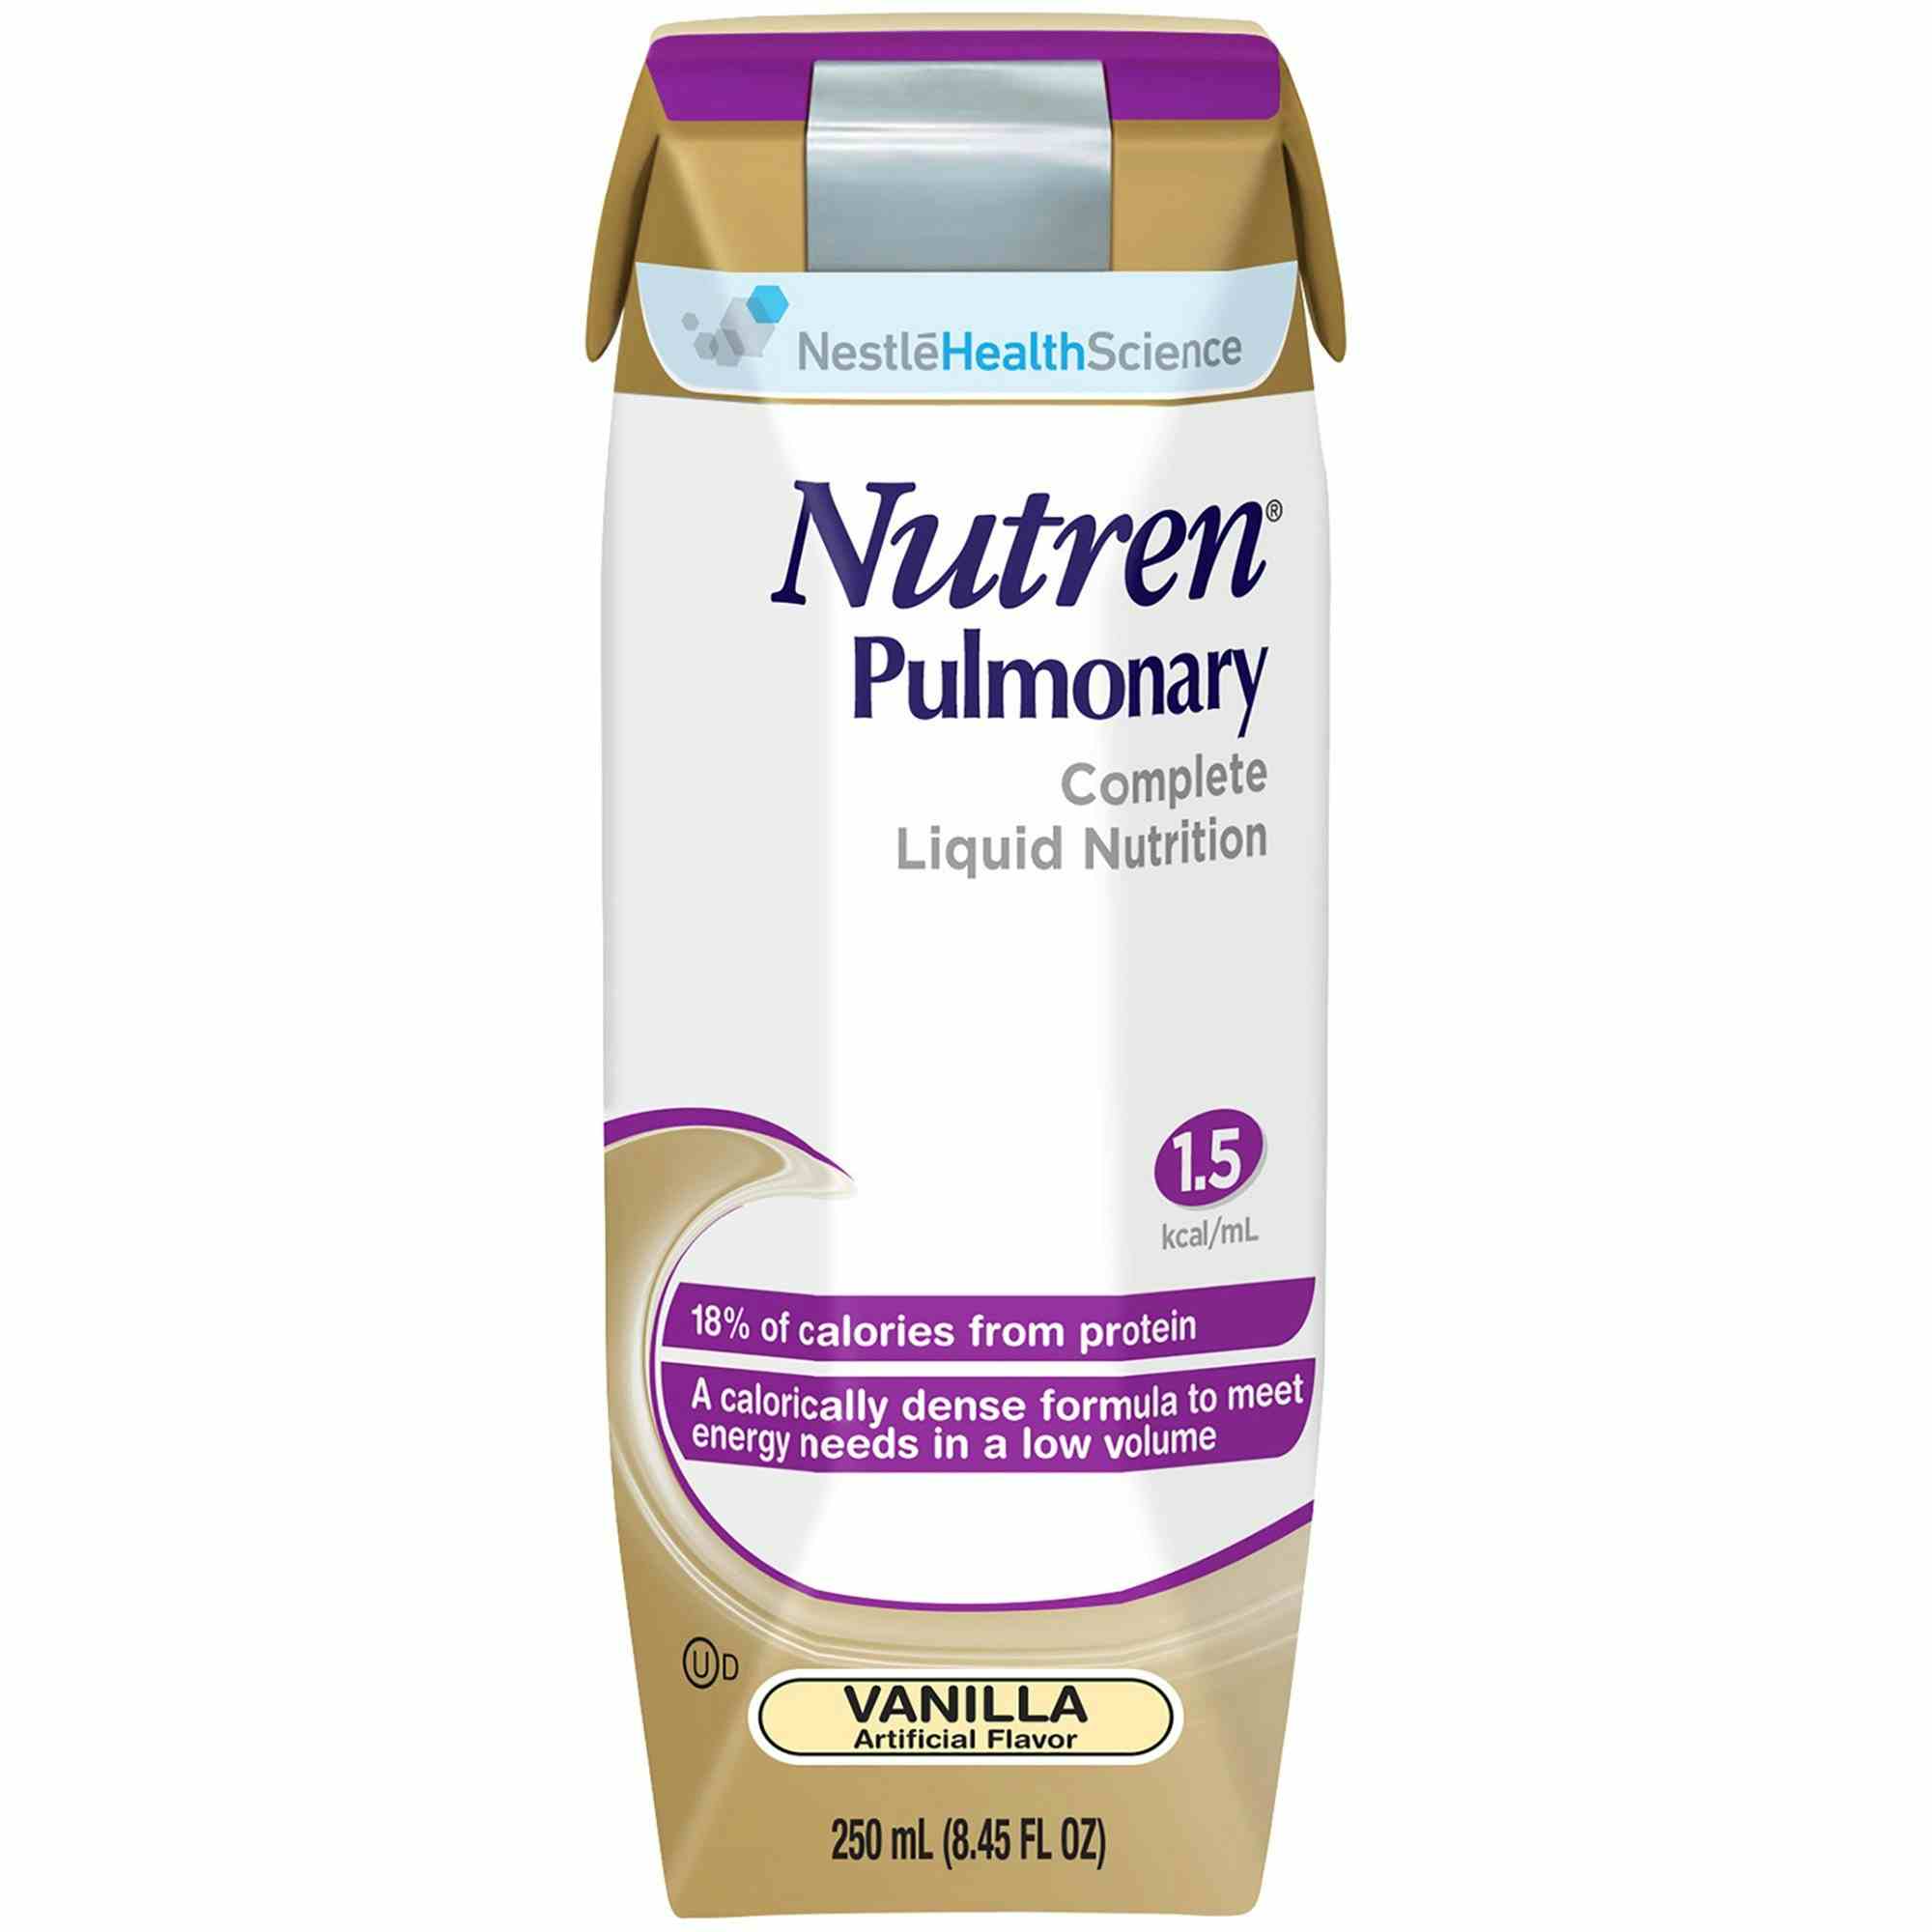 Nestle HealthScience Nutren Pulmonary Complete Liquid Nutrition Oral Supplement/Tube Feeding Formula, Vanilla, 250 mL, 00798716164801, 1 Each